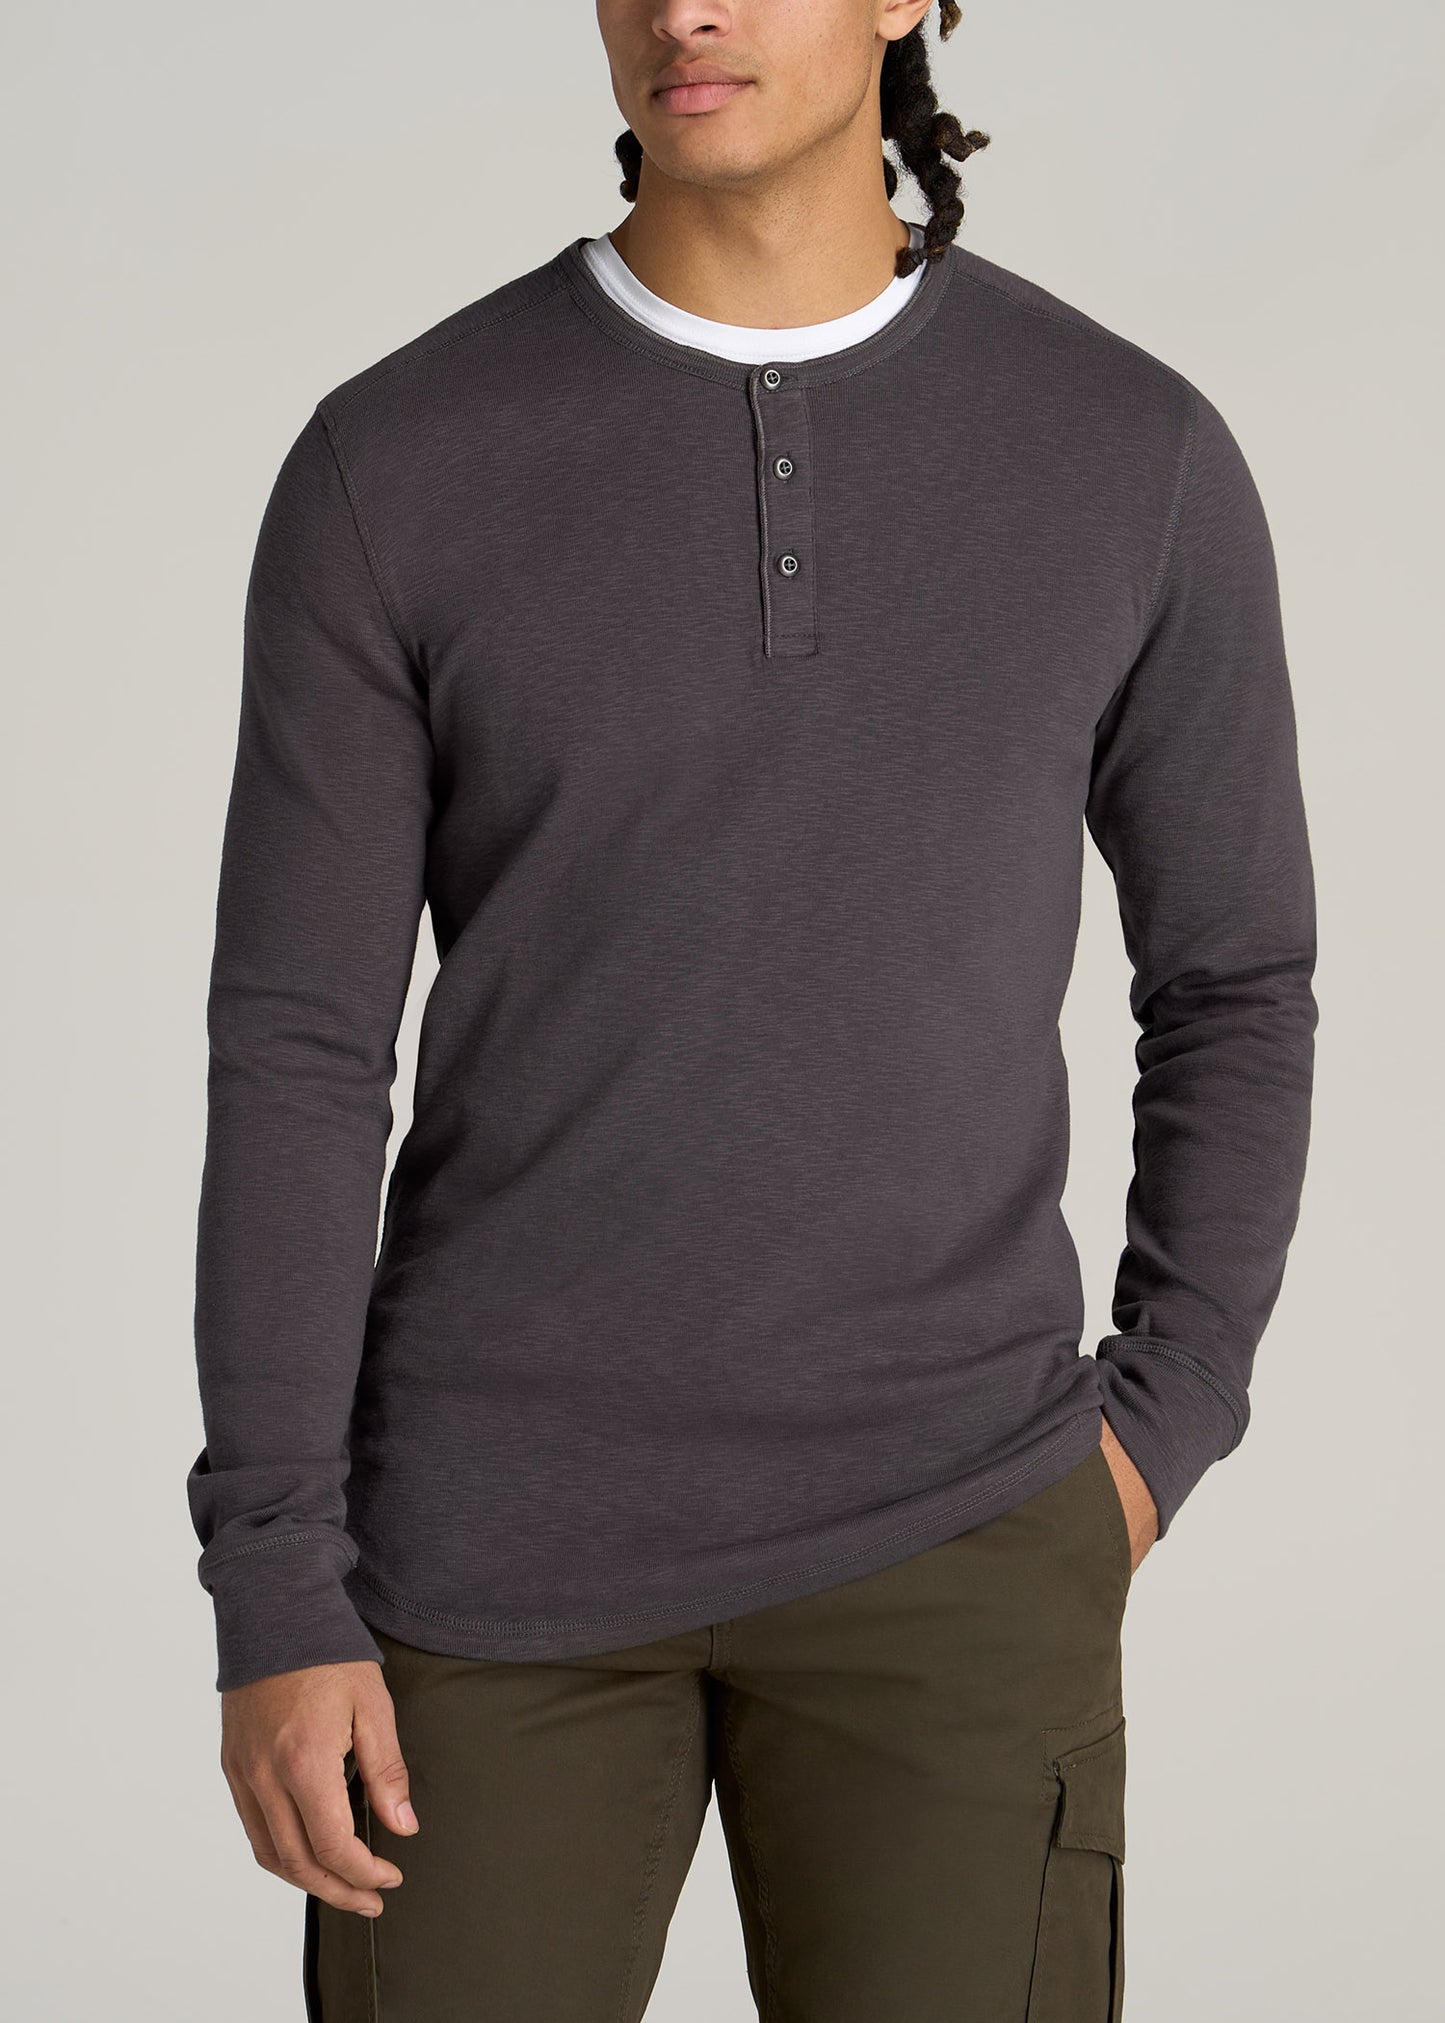 Charcoal Henley Shirt: Heavy Slub Henley Shirt for Tall Men – American Tall